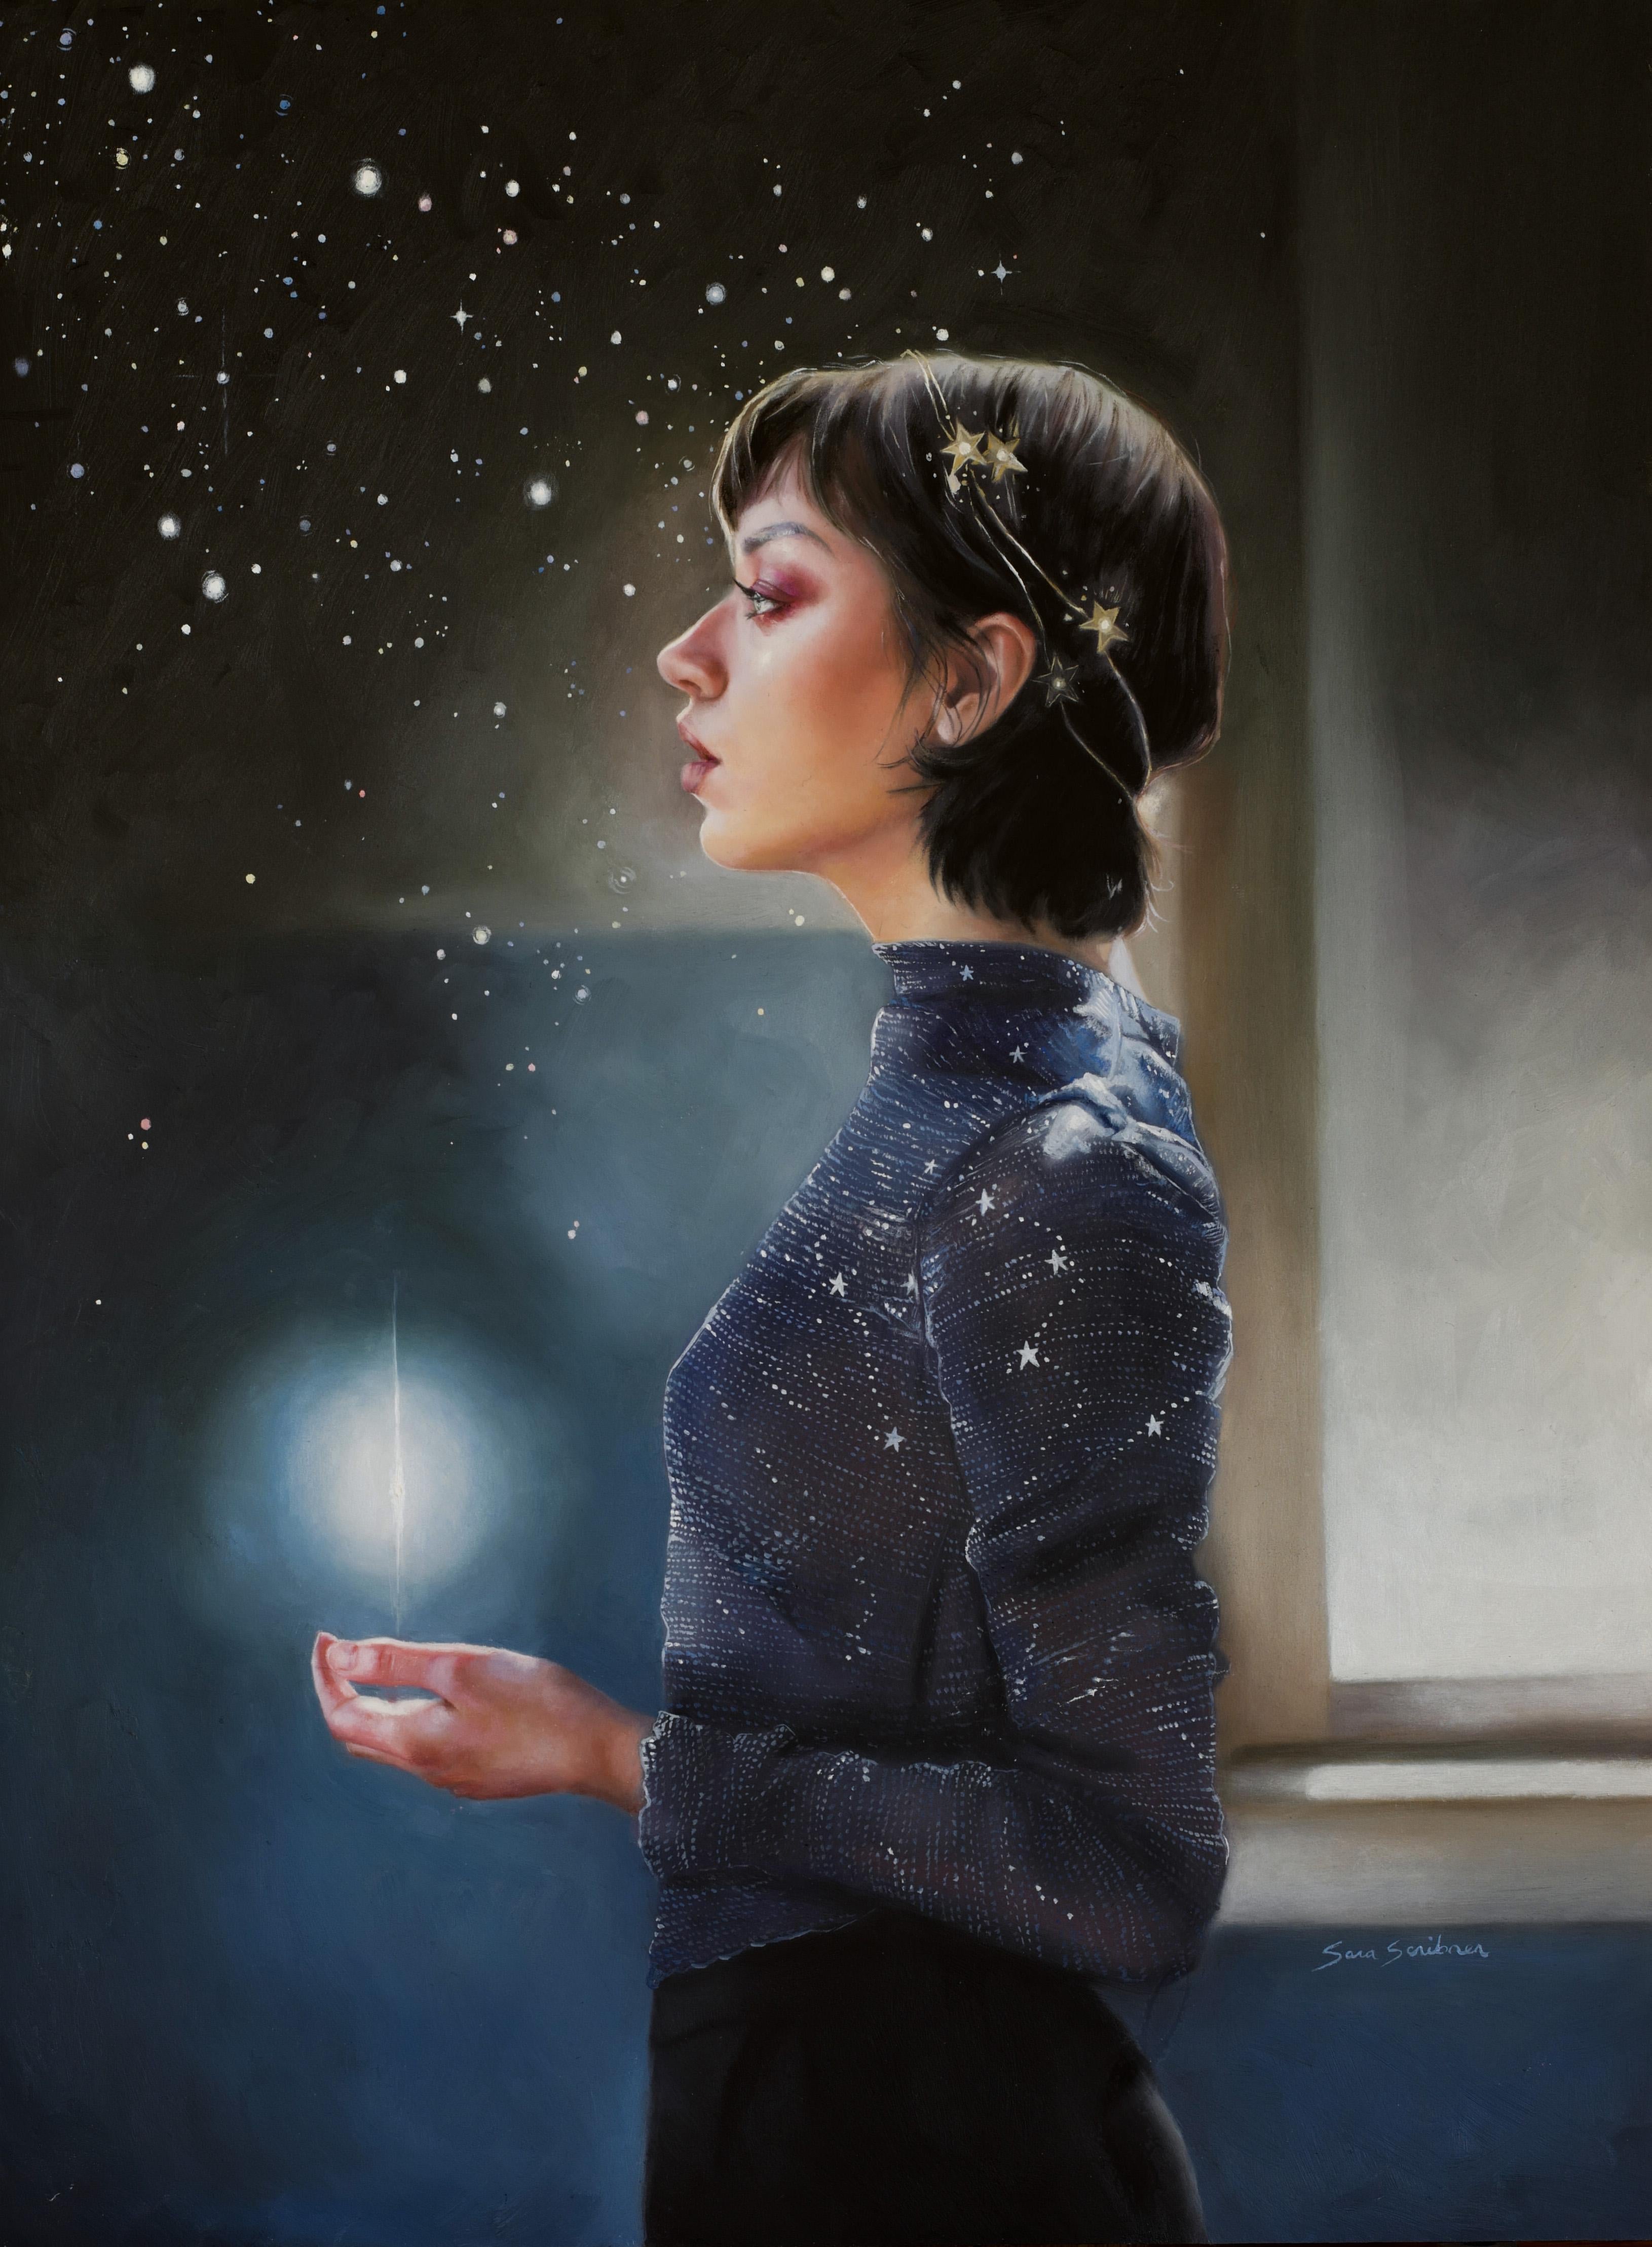 Sara Scribner Figurative Painting - "Nightfall" Oil Painting